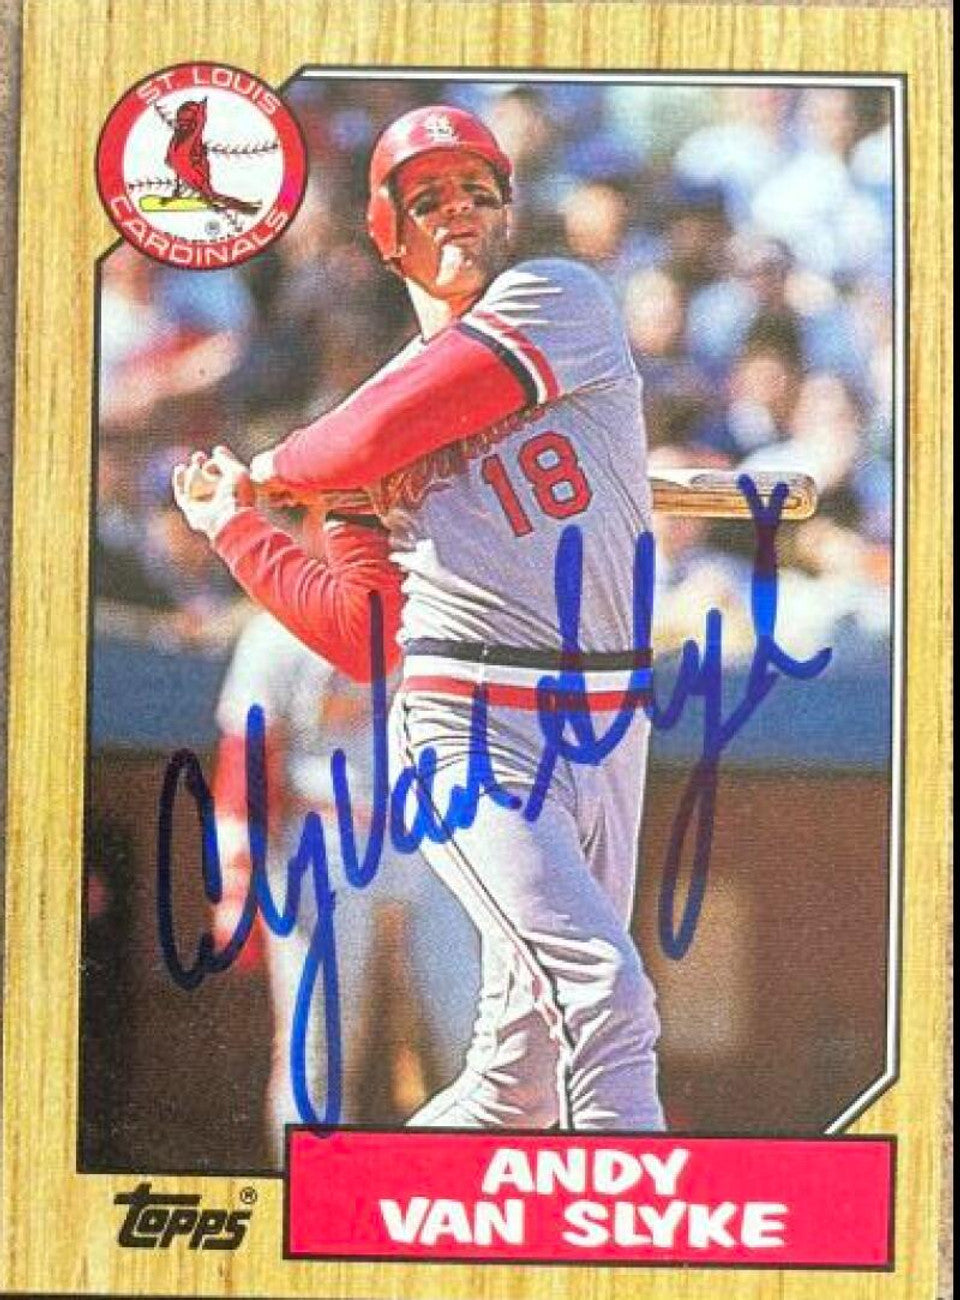 Andy Van Slyke Signed 1987 Topps Baseball Card - St Louis Cardinals